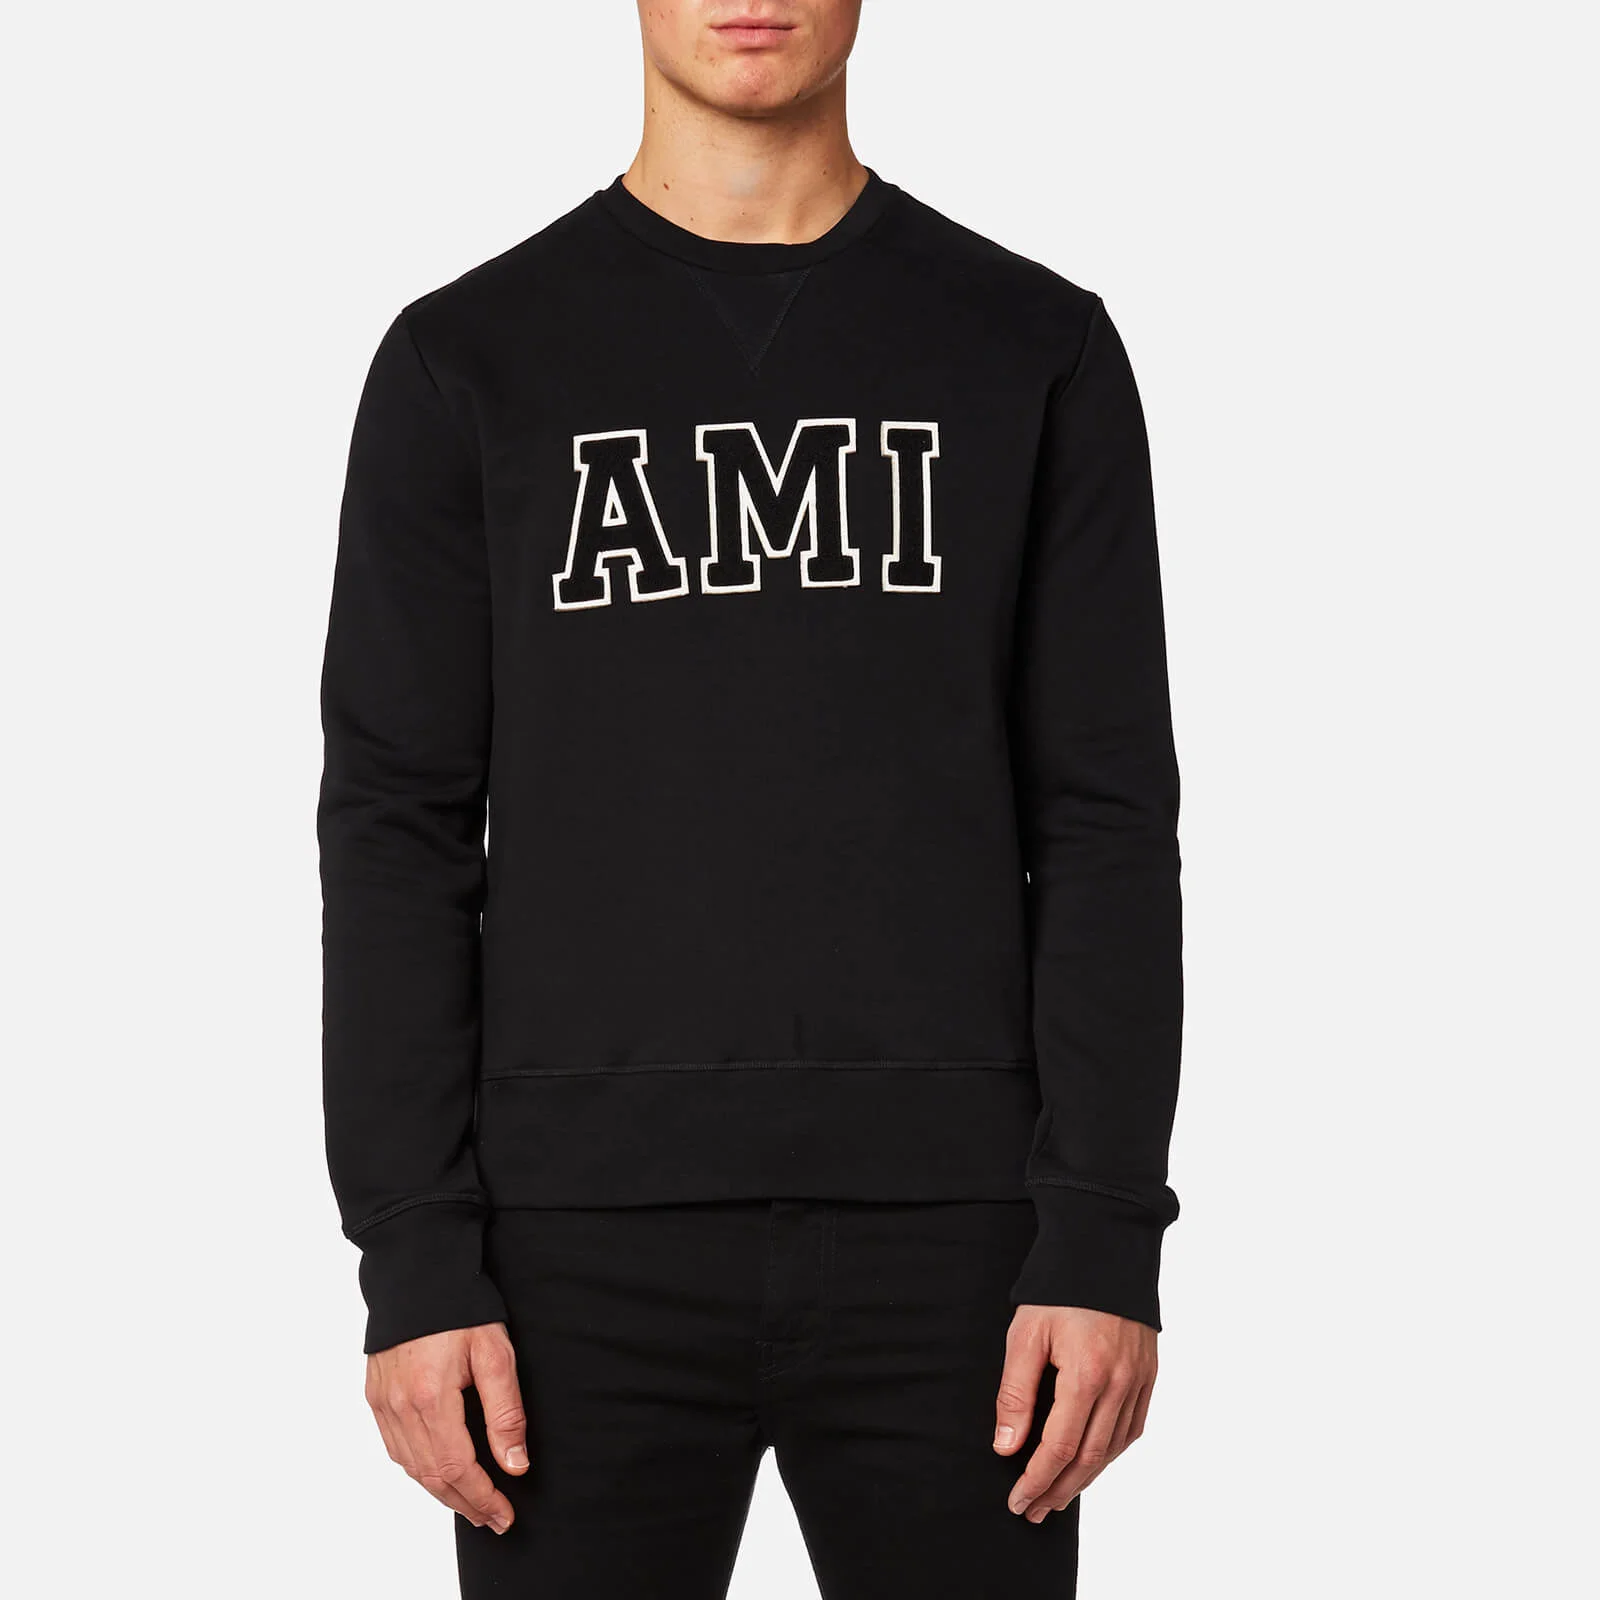 AMI Men's Crew Neck Sweatshirt - Black Image 1